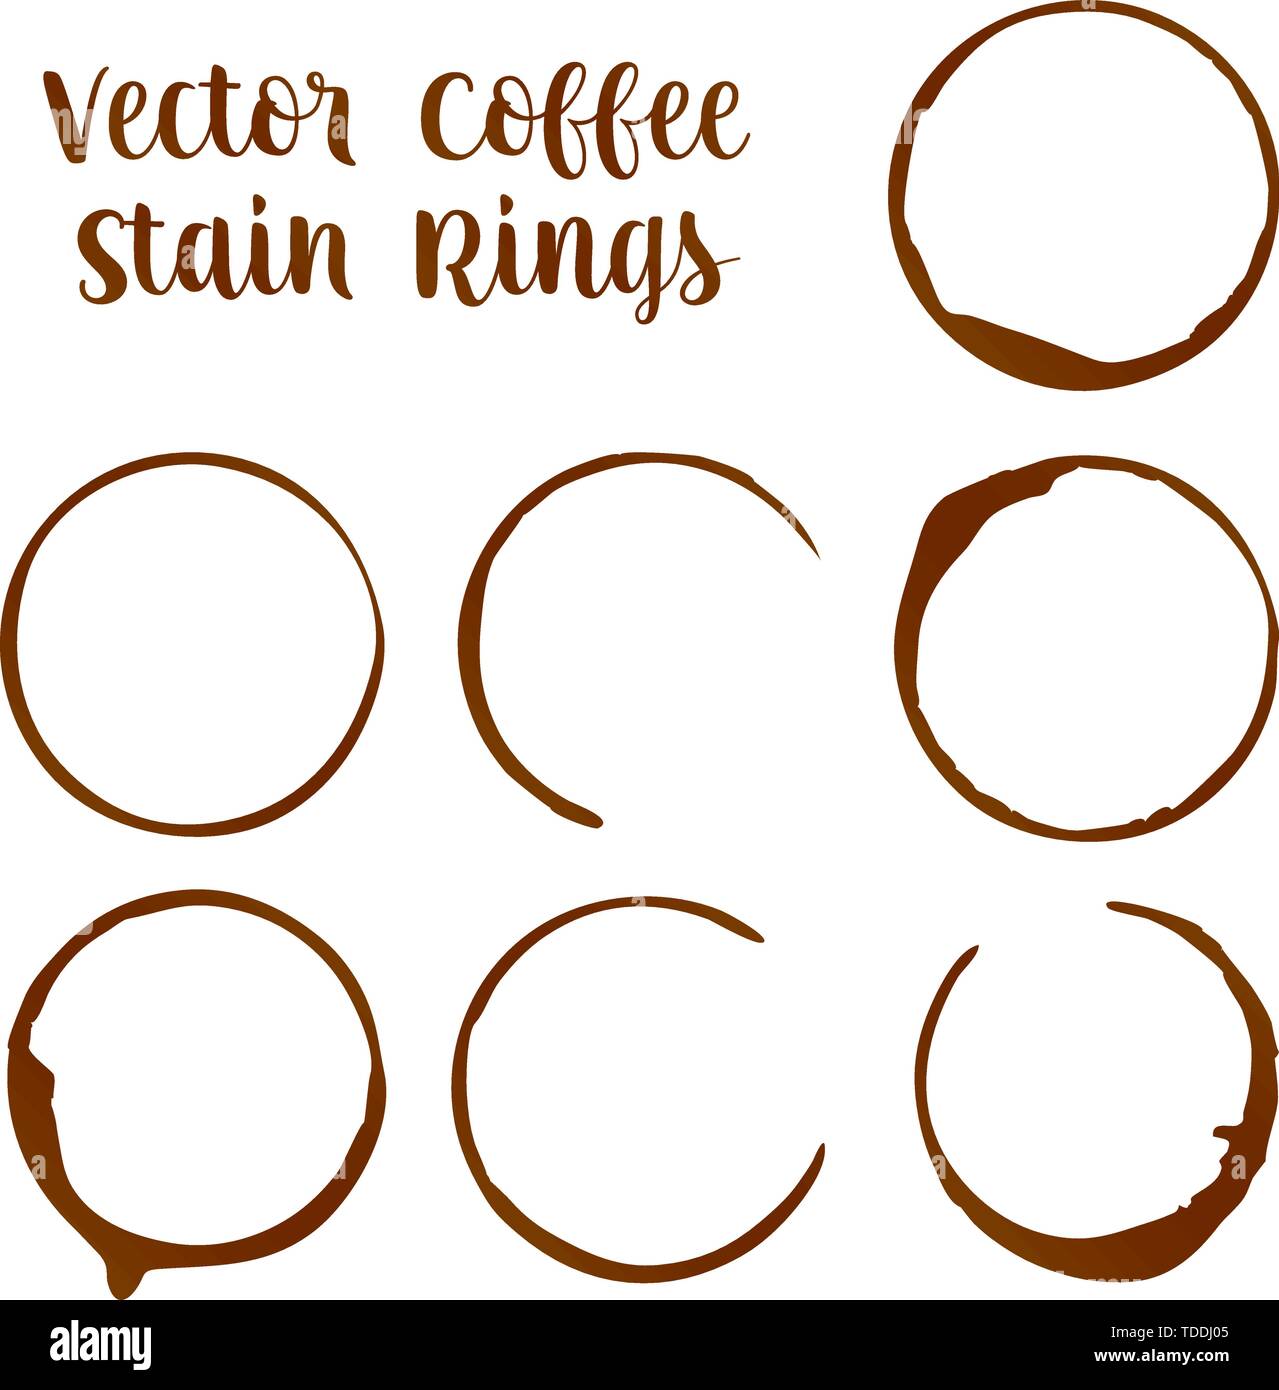 Kaffee oder Espresso Fleck ringe Spuren von cups Vektorgrafiken Stock Vektor